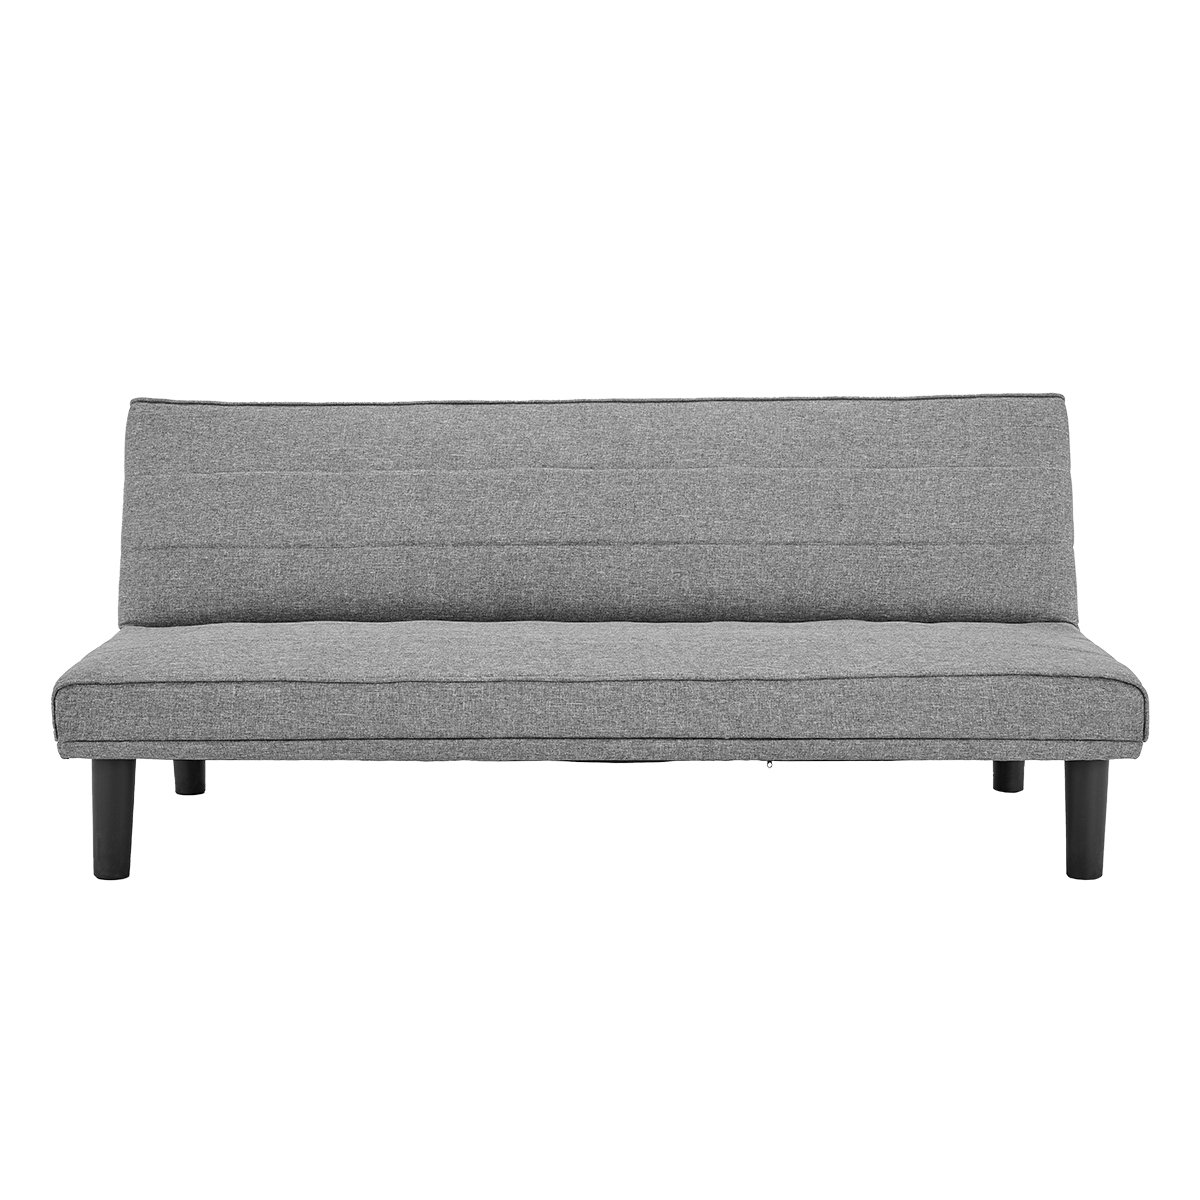 Sarantino 3 Seater M 2620 Modular Linen Sofa Bed Couch - Dark Grey 2